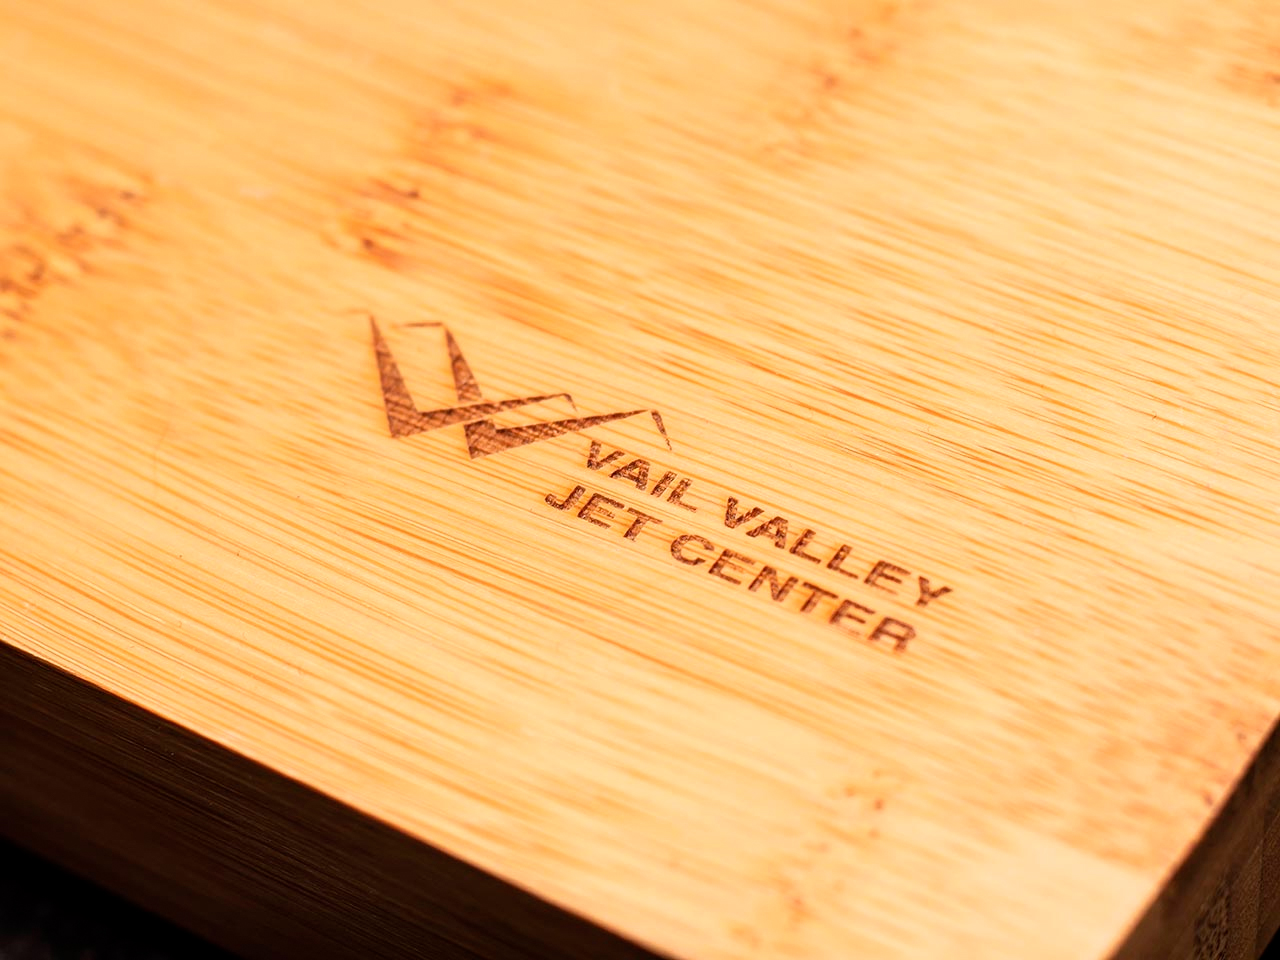 Vail Valley Jet Center